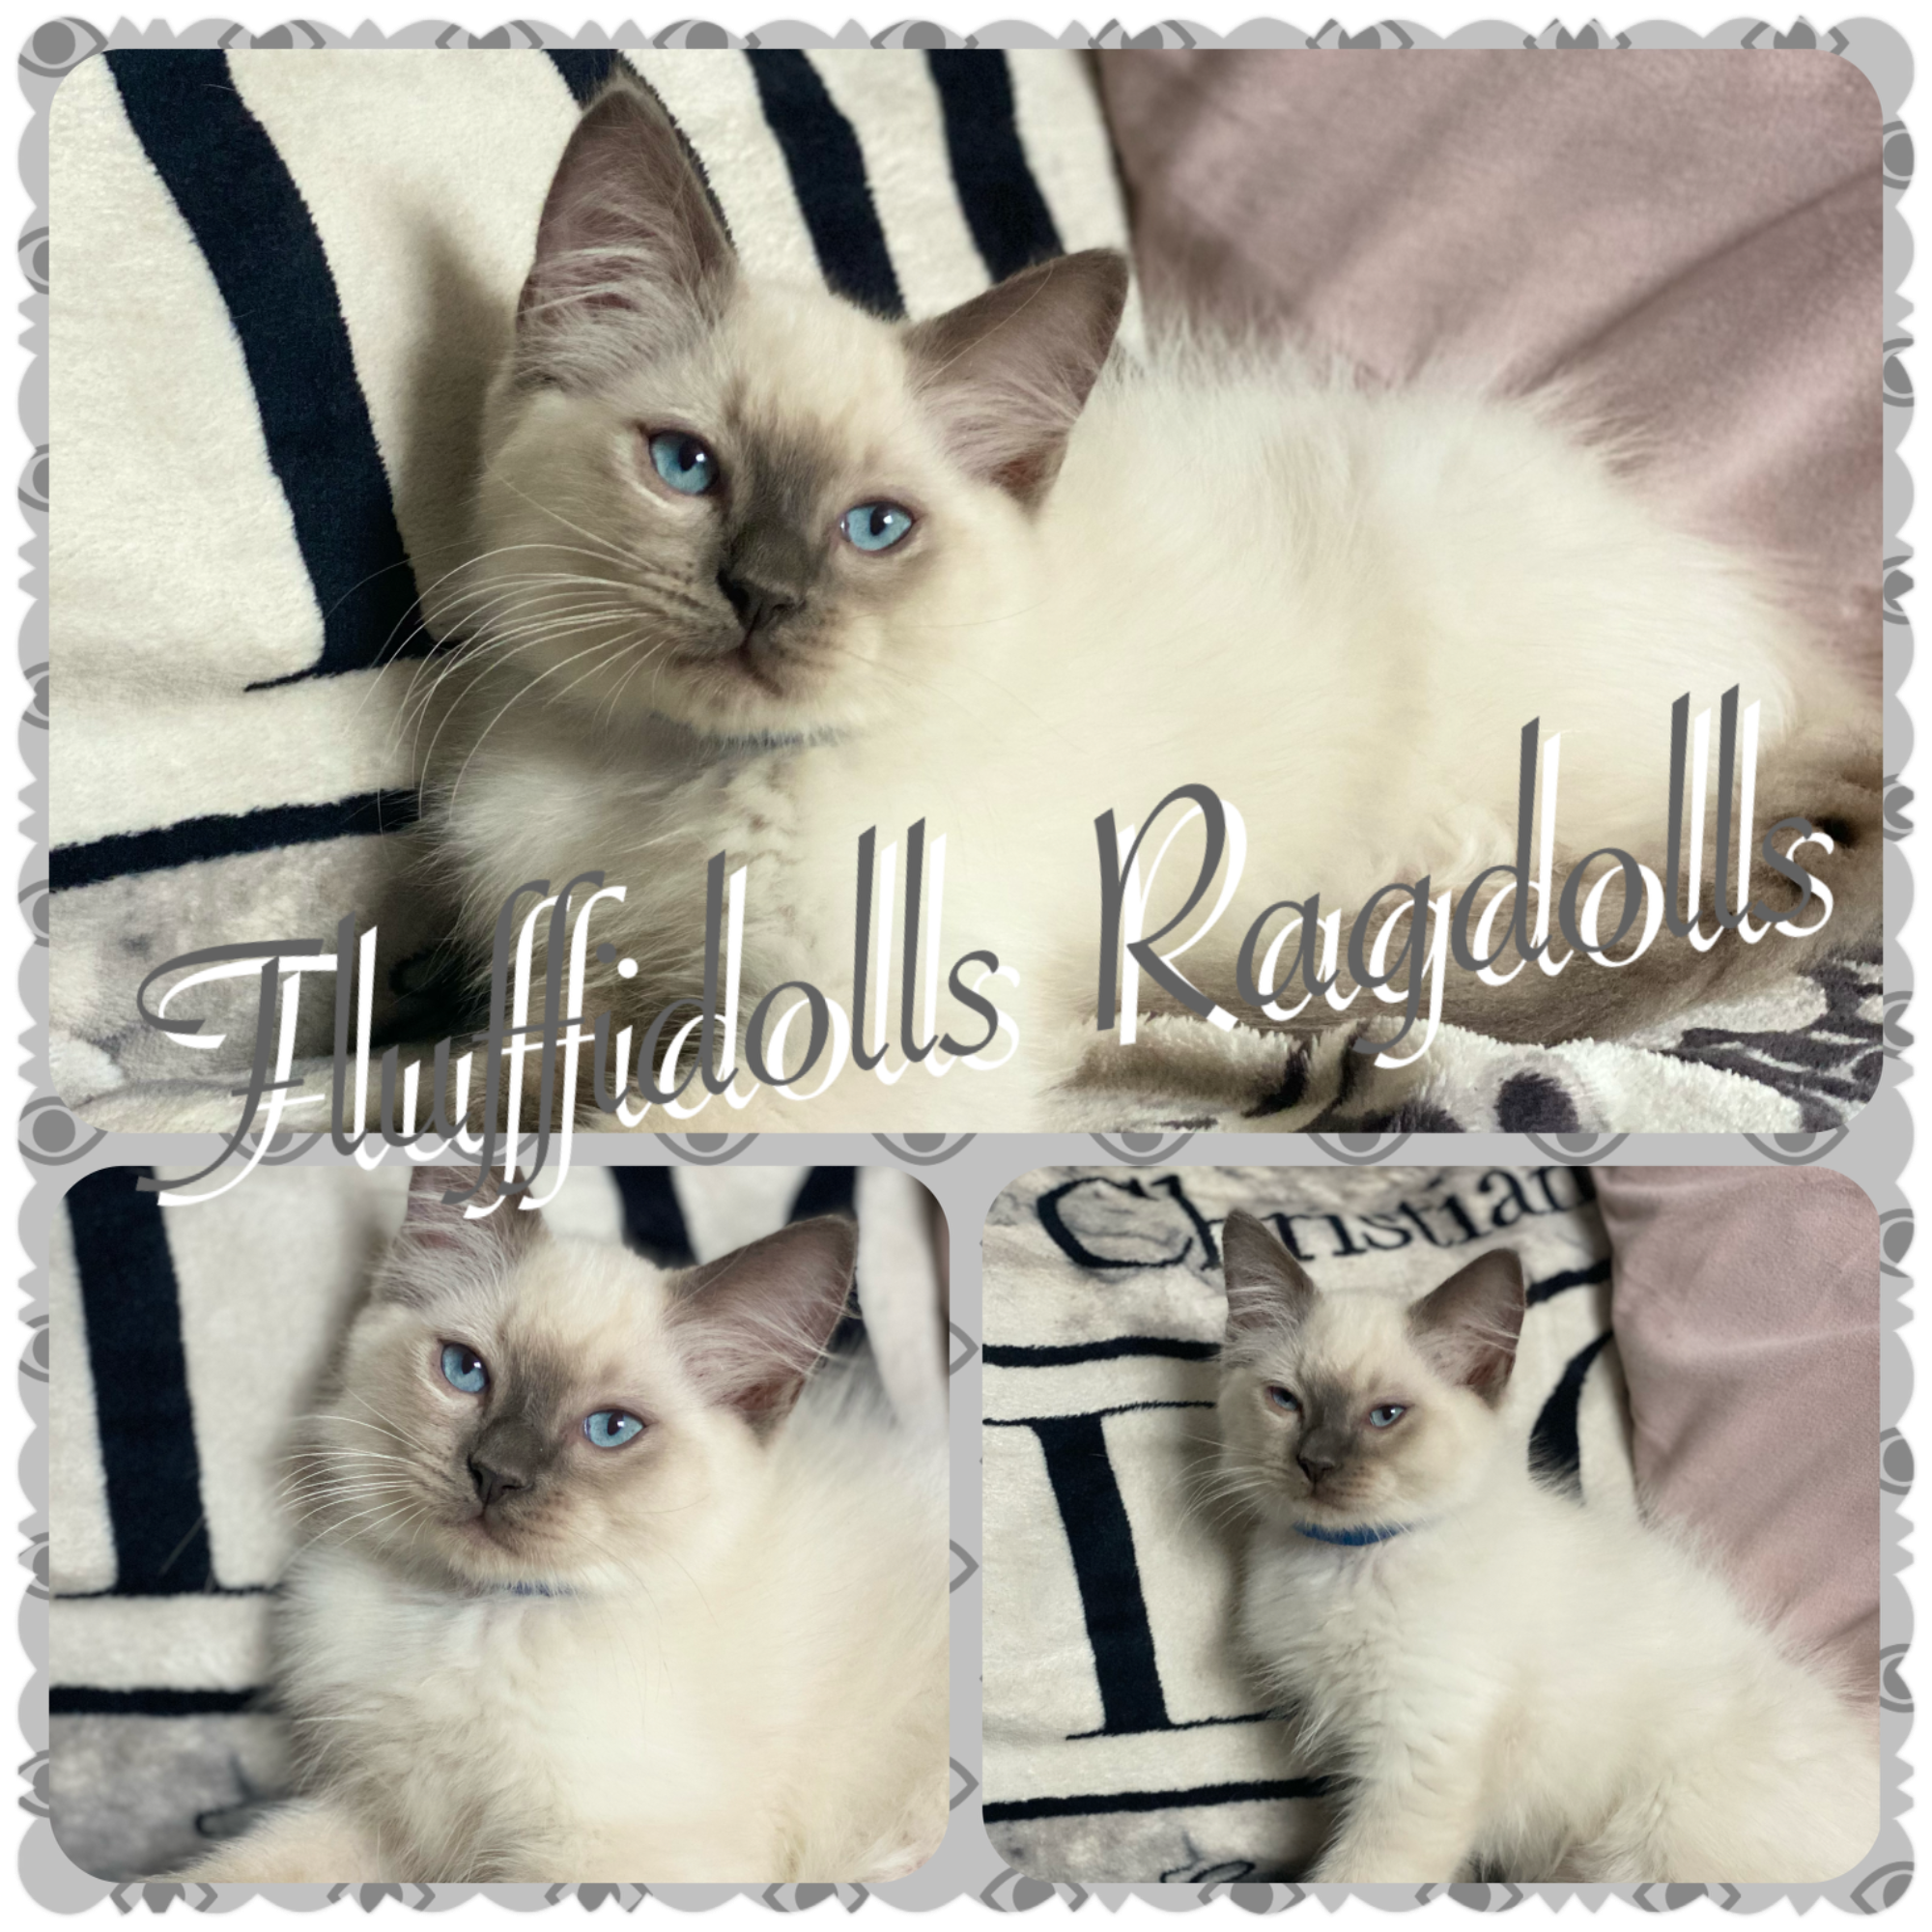 Fluffidolls Ragdolls Kittens available for homes Swindon Wiltshire uk